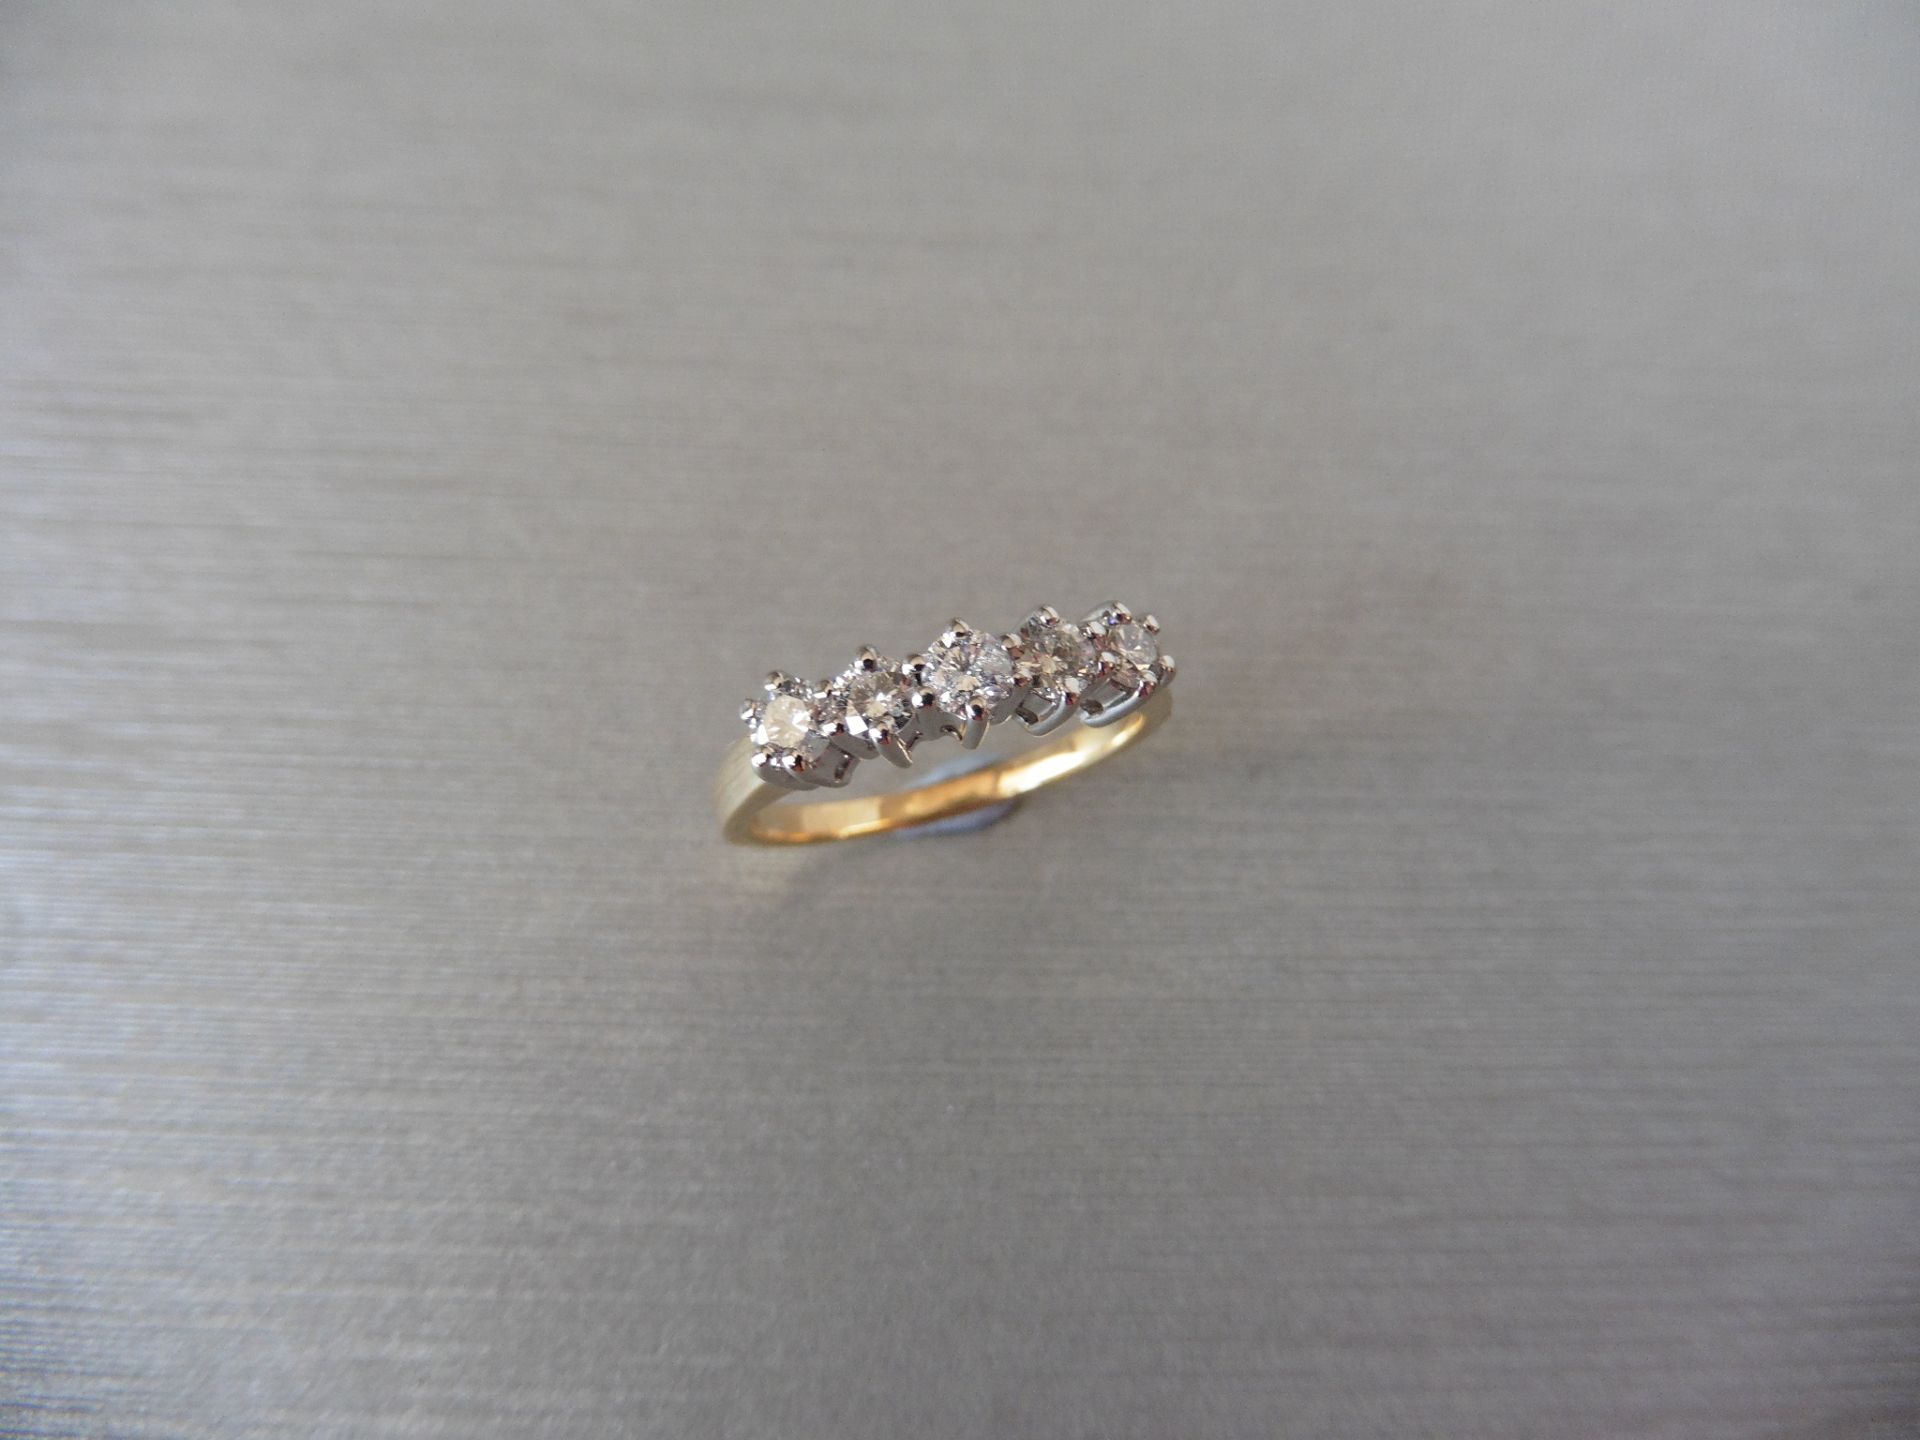 0.50ct Diamond five stone ring set with five brilliant cut diamonds. H/I colour and SI3 clarity. The